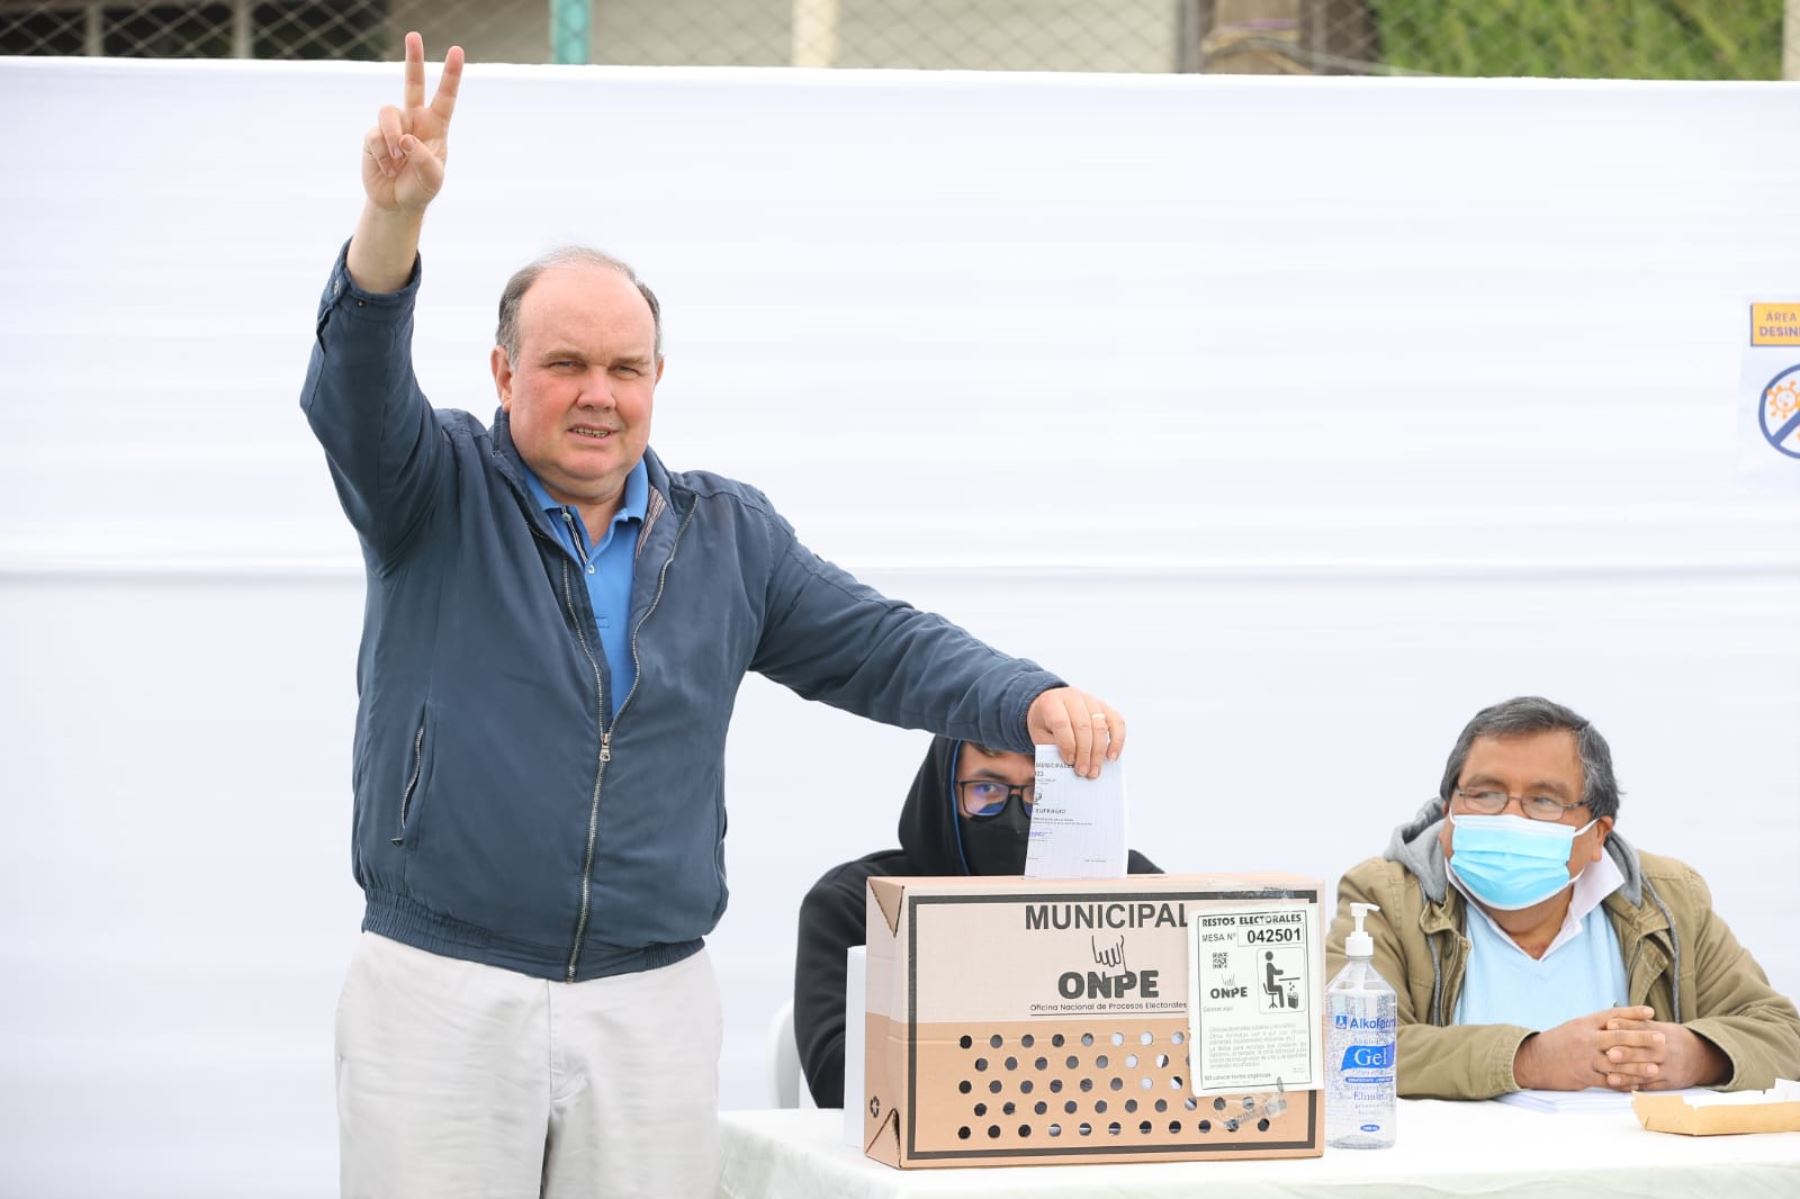 Rafael López Aliaga voted in Miraflores